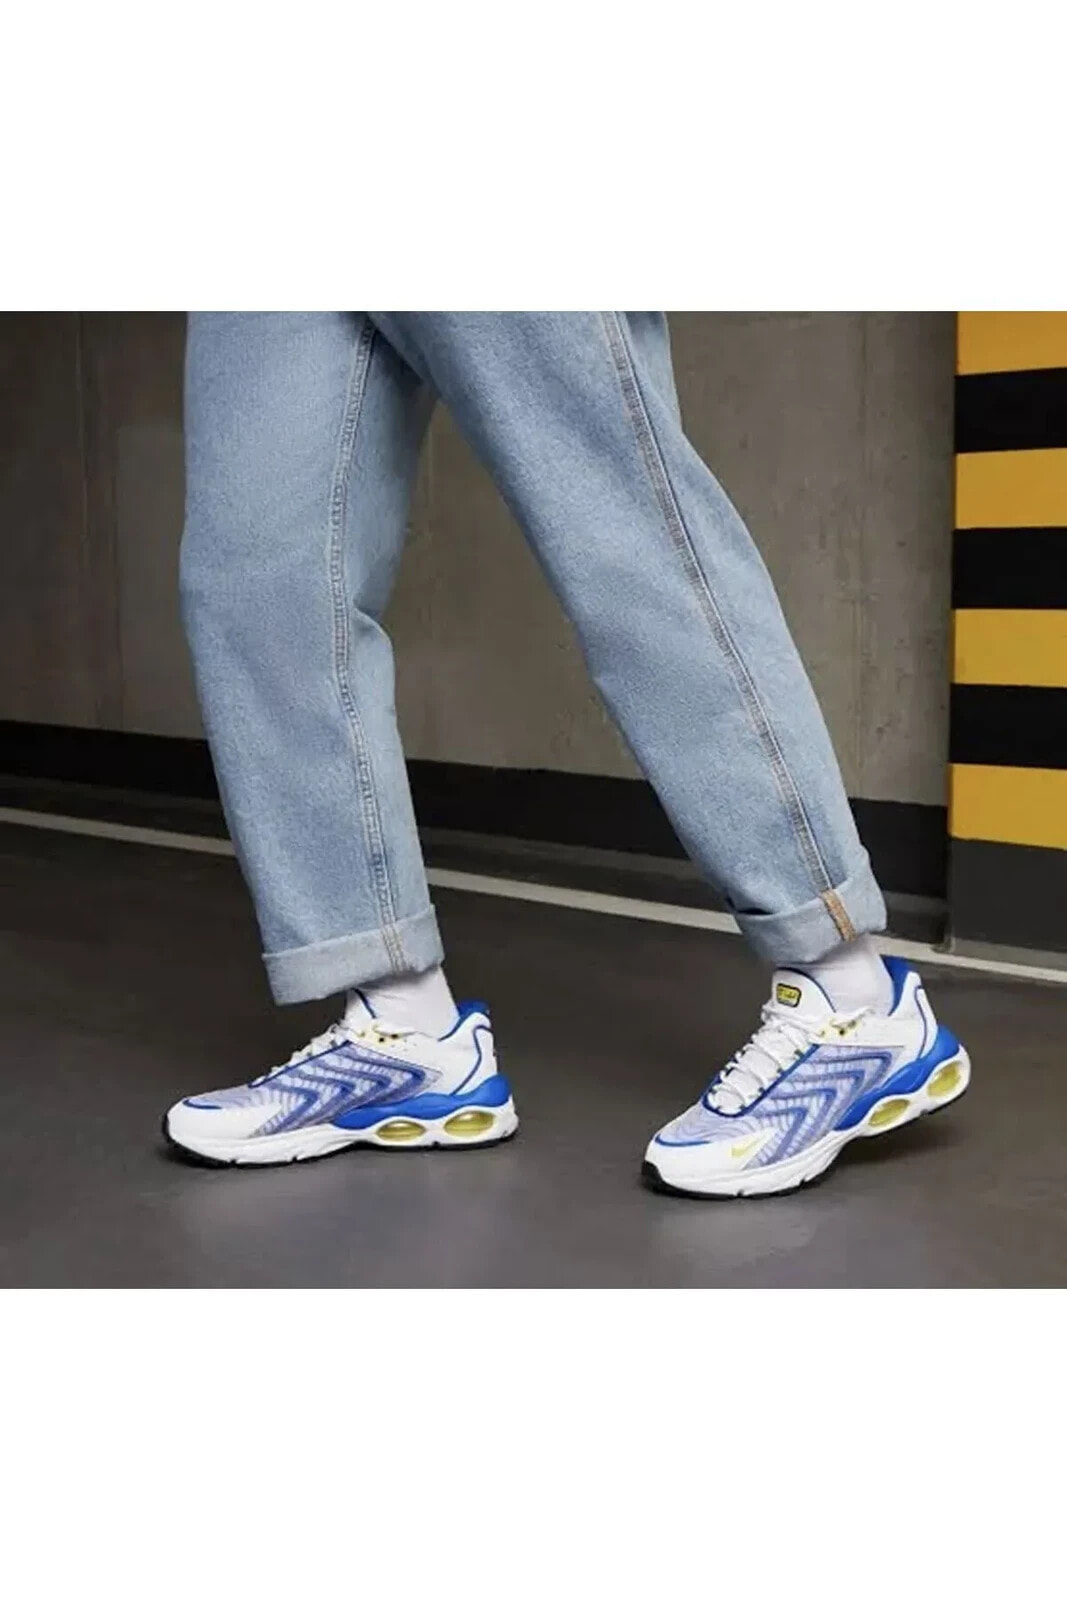 Air Max ''Tailwind Style'' Spor Ayakkabı mavi